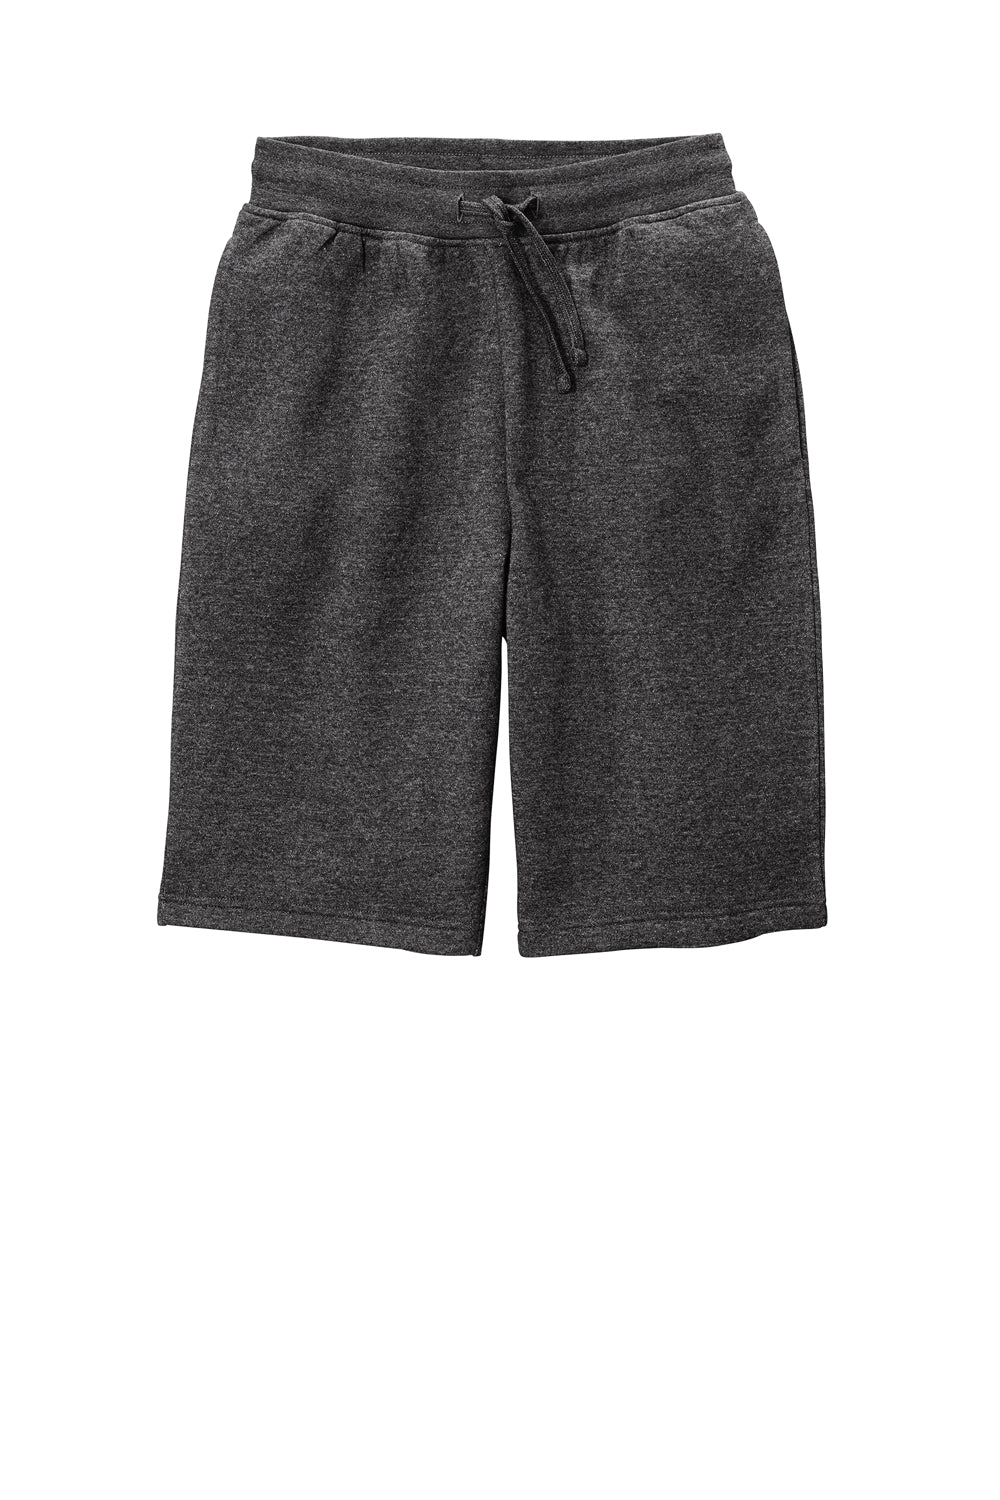 District DT6108 V.I.T. Fleece Shorts w/ Pockets Heathered Charcoal Grey Flat Front